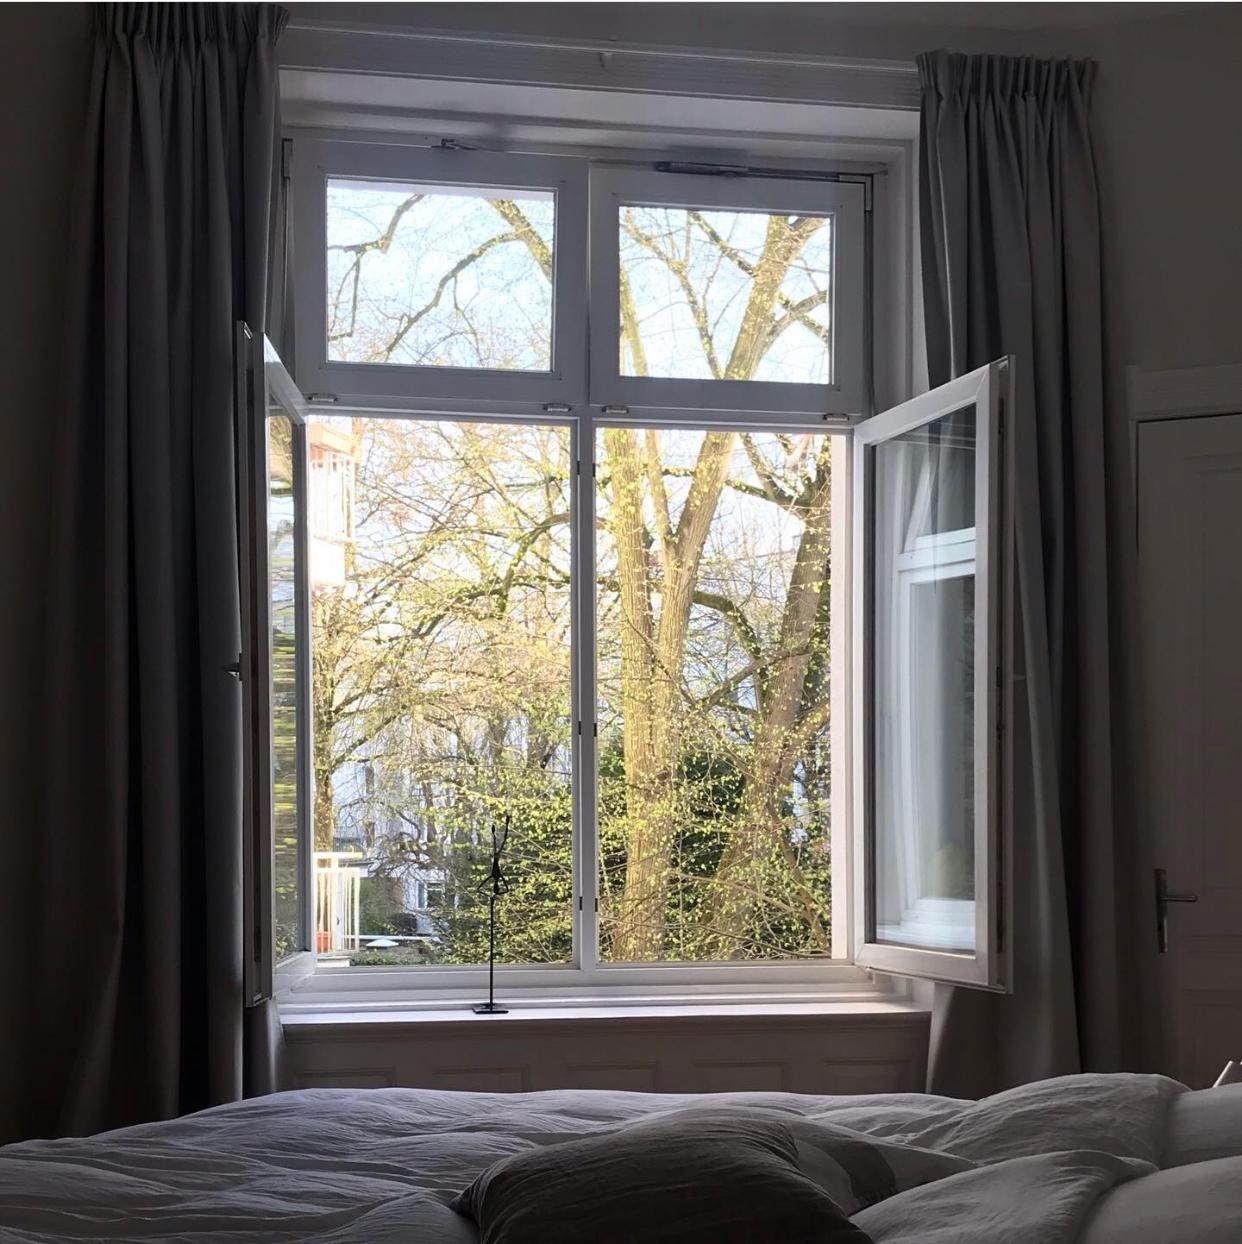 Es wird Frühling! 🙌🏻☀️ #frühling #sunshine #sonne #windowview #window #esgrüntsogrün #schlafzimmer #bedroom